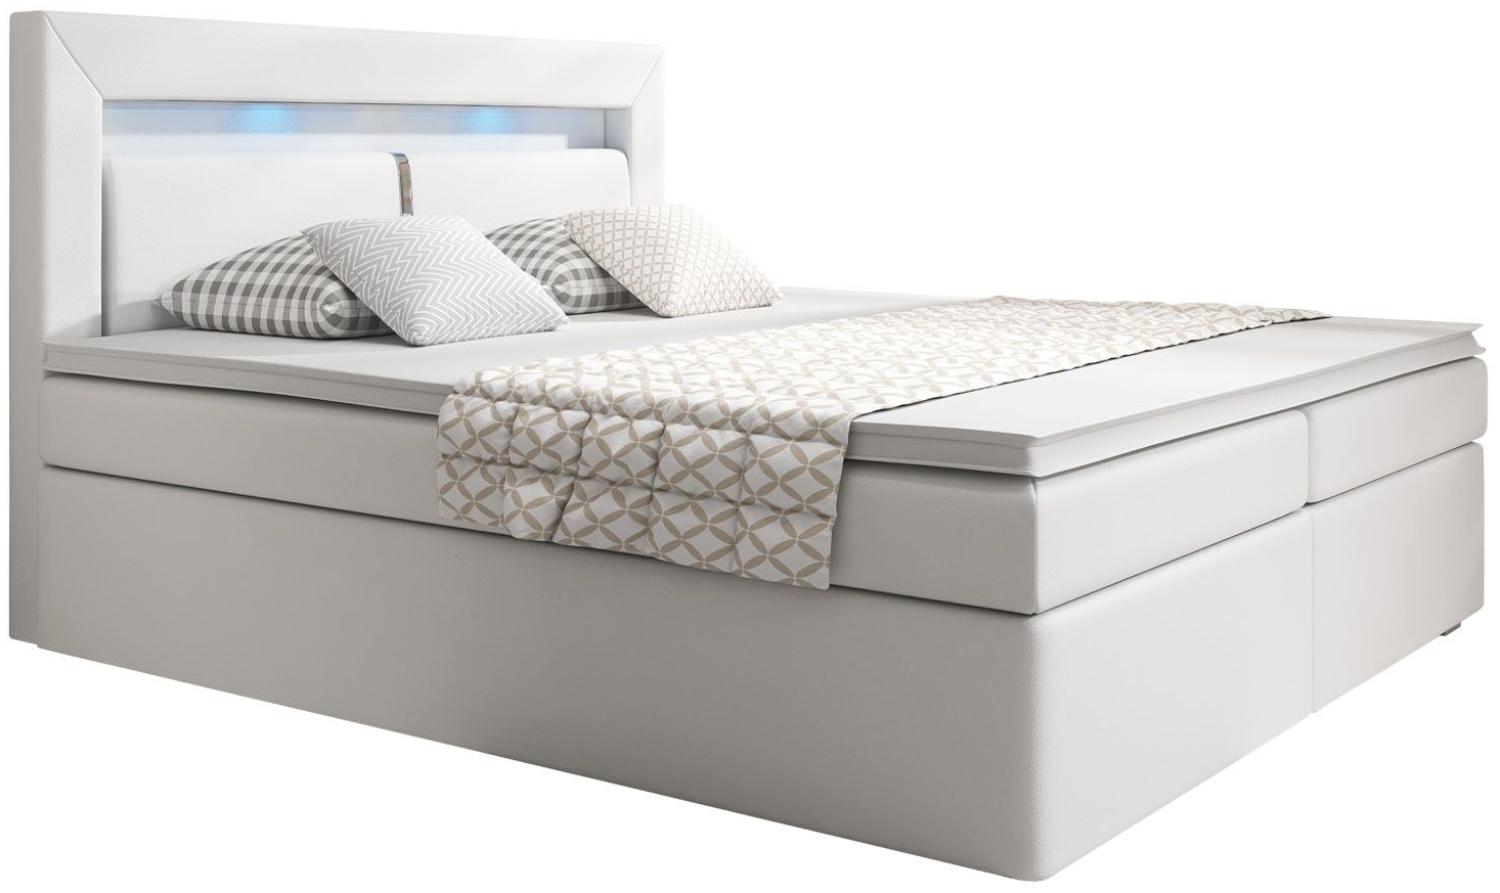 Juskys Boxspringbett New Jersey 140 x 200 cm mit Bettkästen, LED Beleuchtung, Bonell-Matratzen, Topper & Kunstleder - weiß – Bett Doppelbett Bild 1